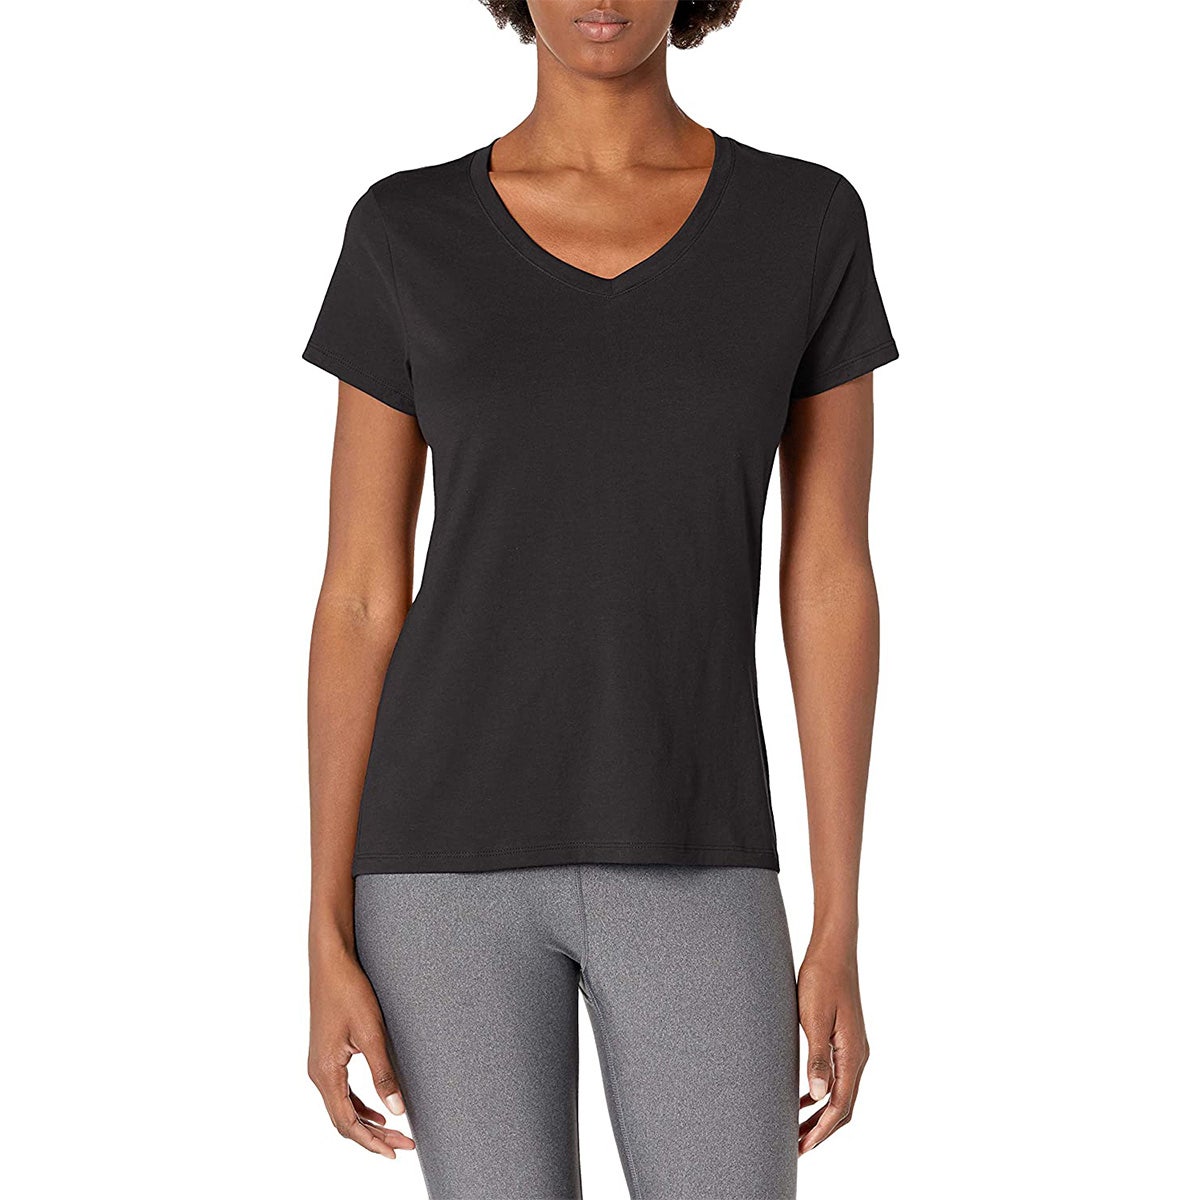 Hanes Women’s X-Temp V-Neck Cotton Blend T-Shirt – Comfort Cool